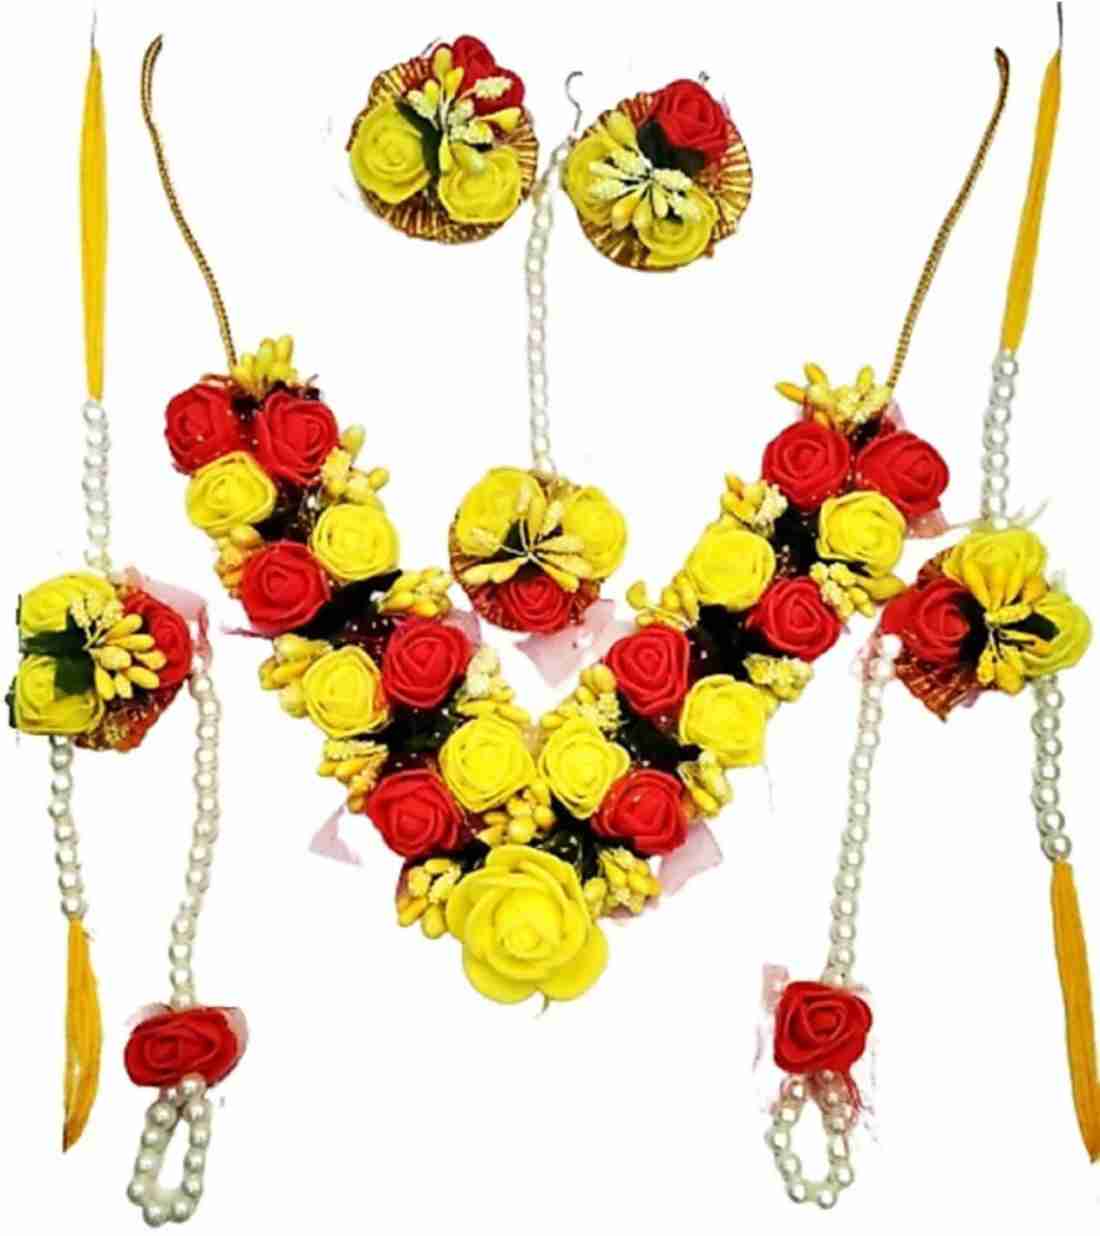 Lamansh Flower 🌺 Jewellery 1 Necklace, 2 Earrings ,1 Maangtika & 2 Bracelets Attached with Ring set / Red-Yellow LAMANSH® Handmade Flower Jewellery Set For Women & Girls / Haldi Set